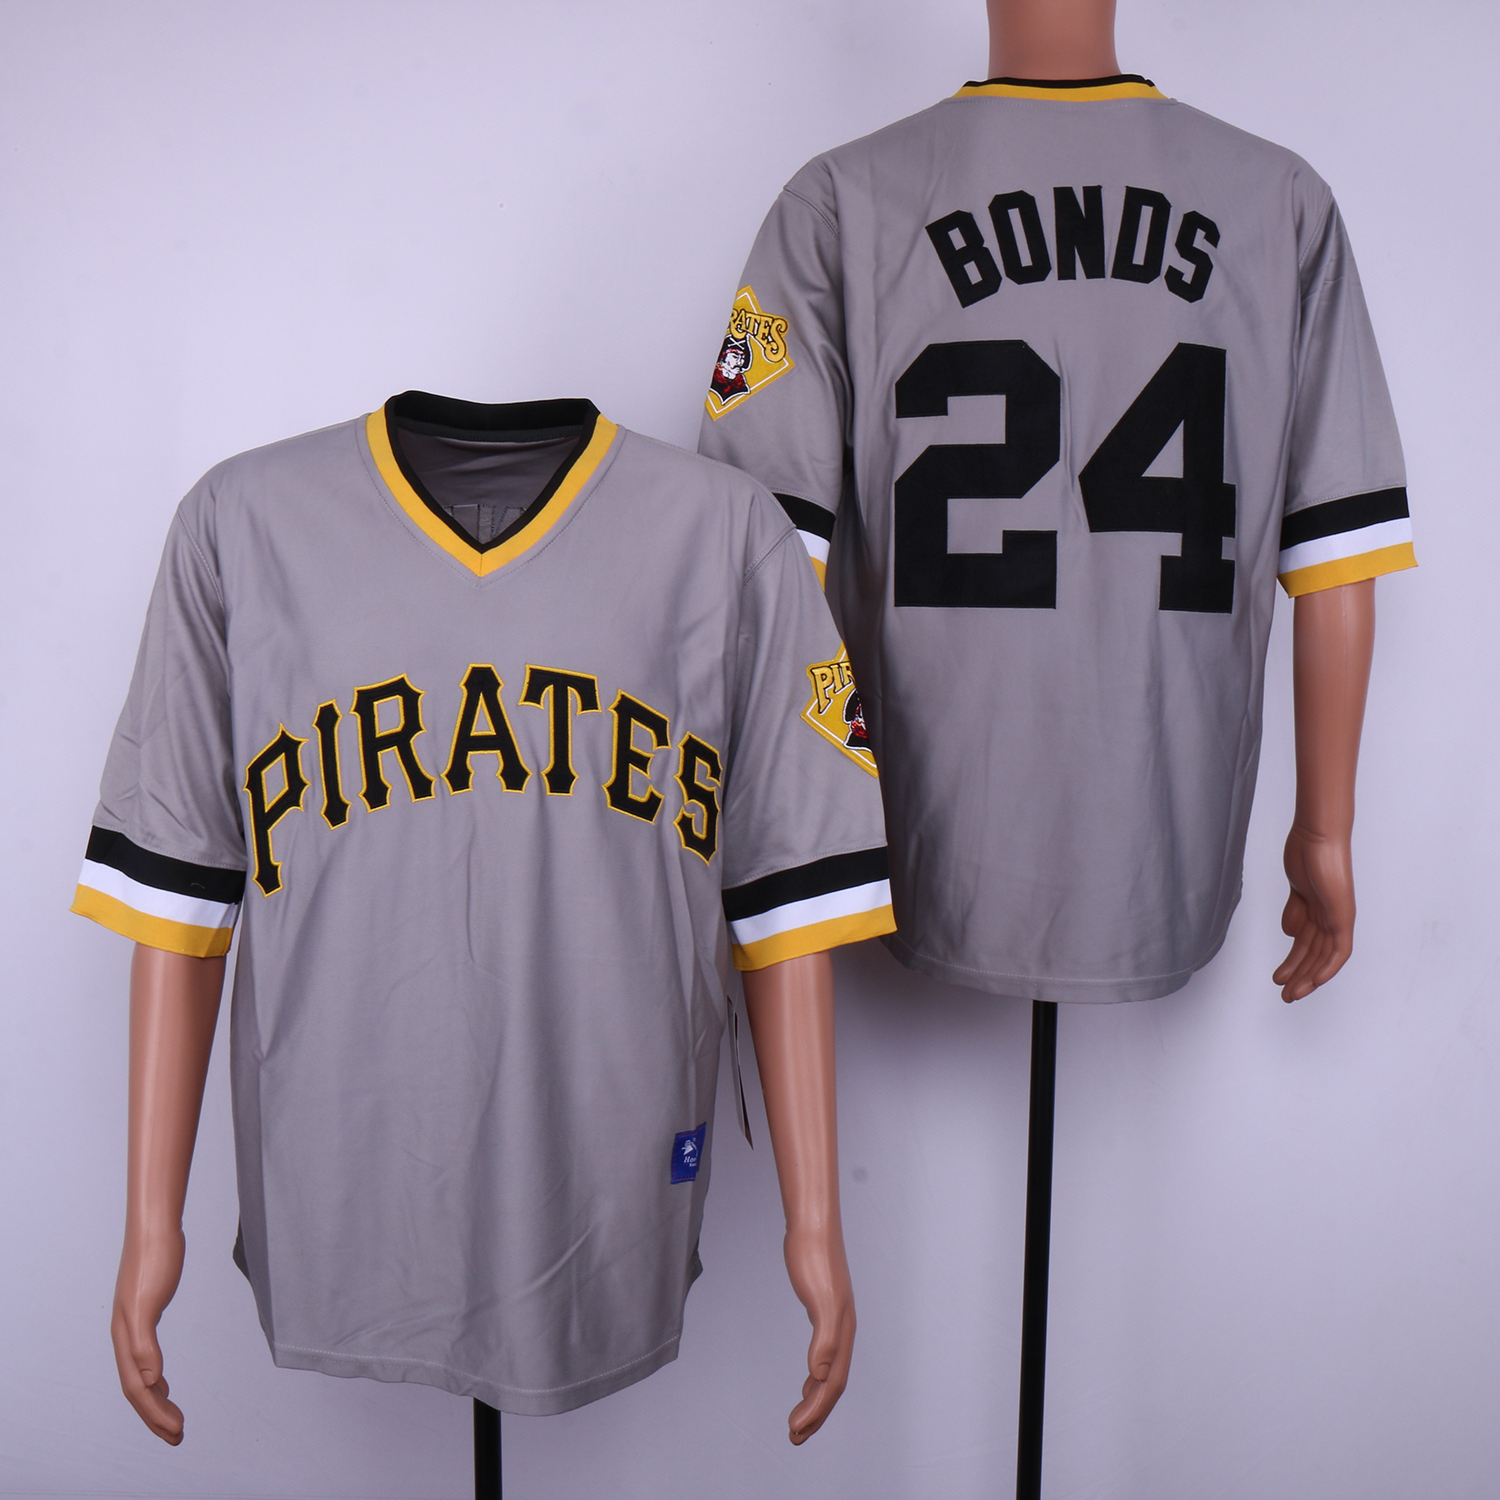 Men Pittsburgh Pirates #24 Bonds Grey MLB Jerseys